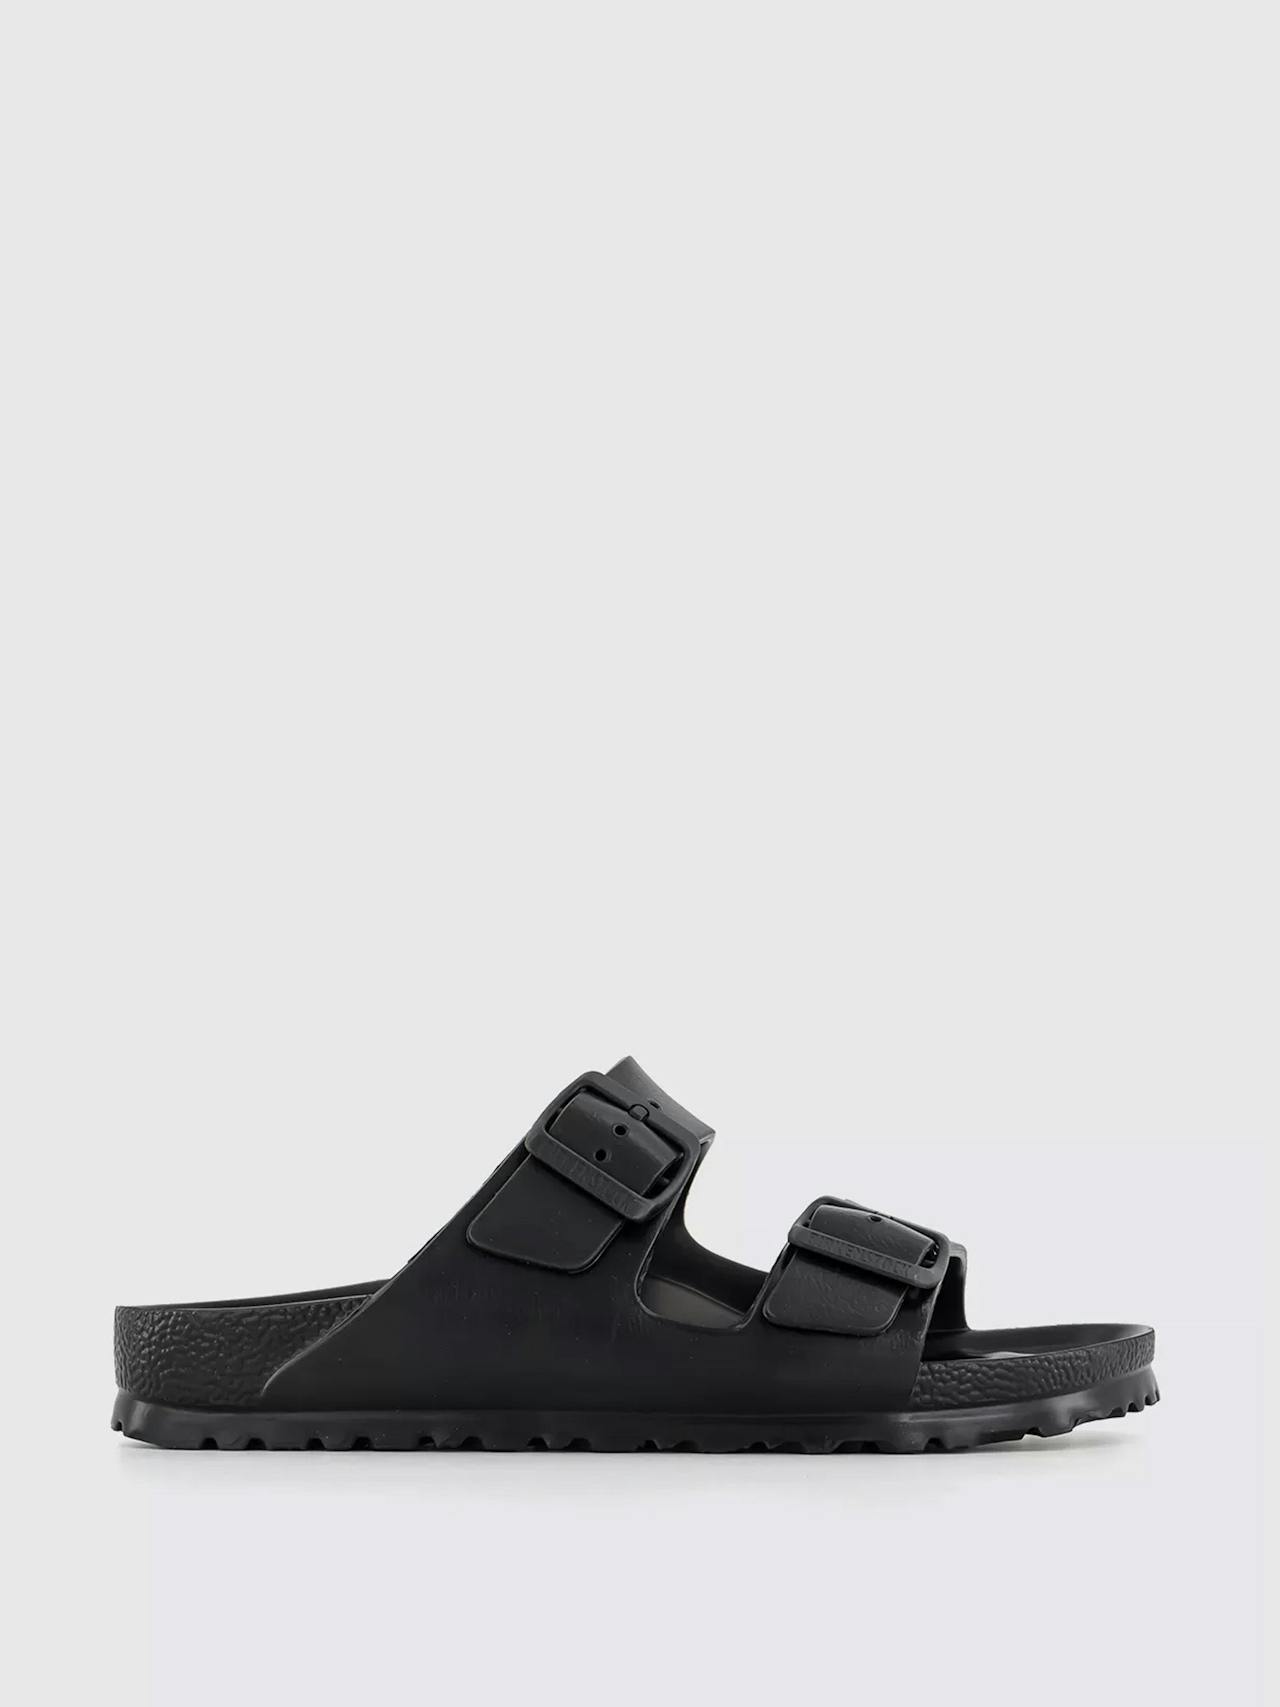 Arizona eva sandals in black